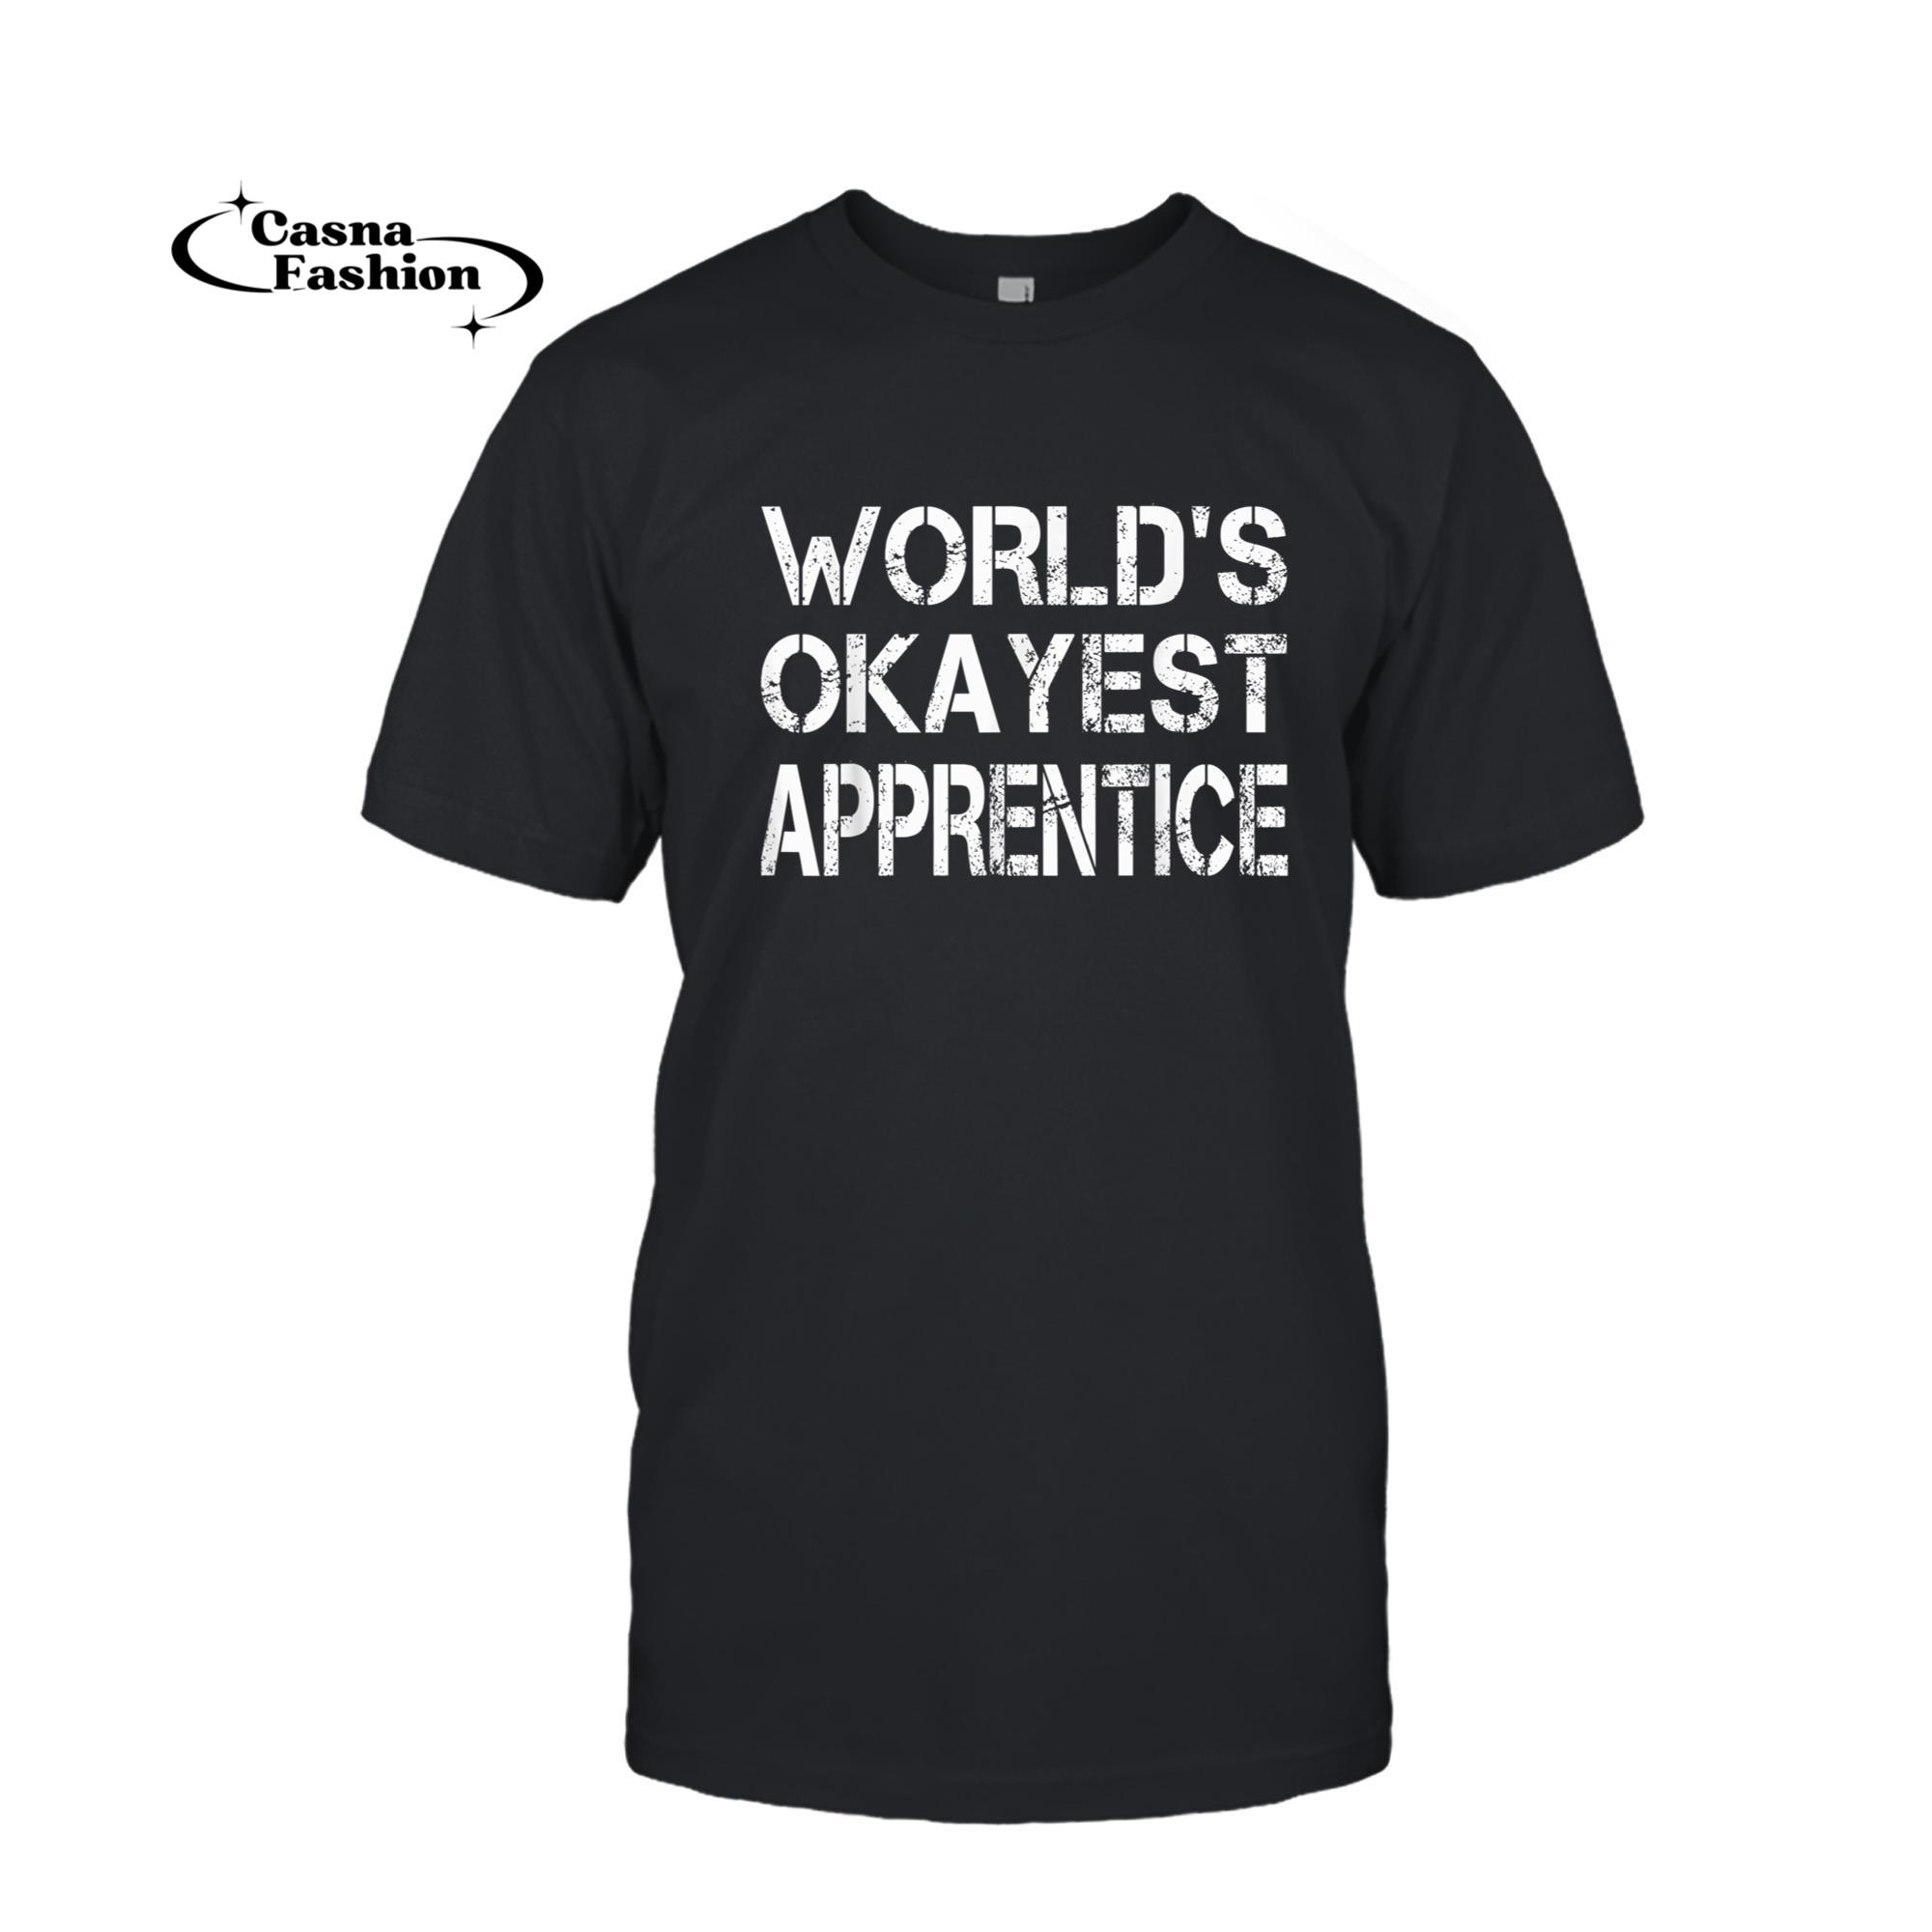 casnafashion_T-shirt_World's Okayest Apprentice for Carpenter Construction T-Shirt_T-shirt_Black